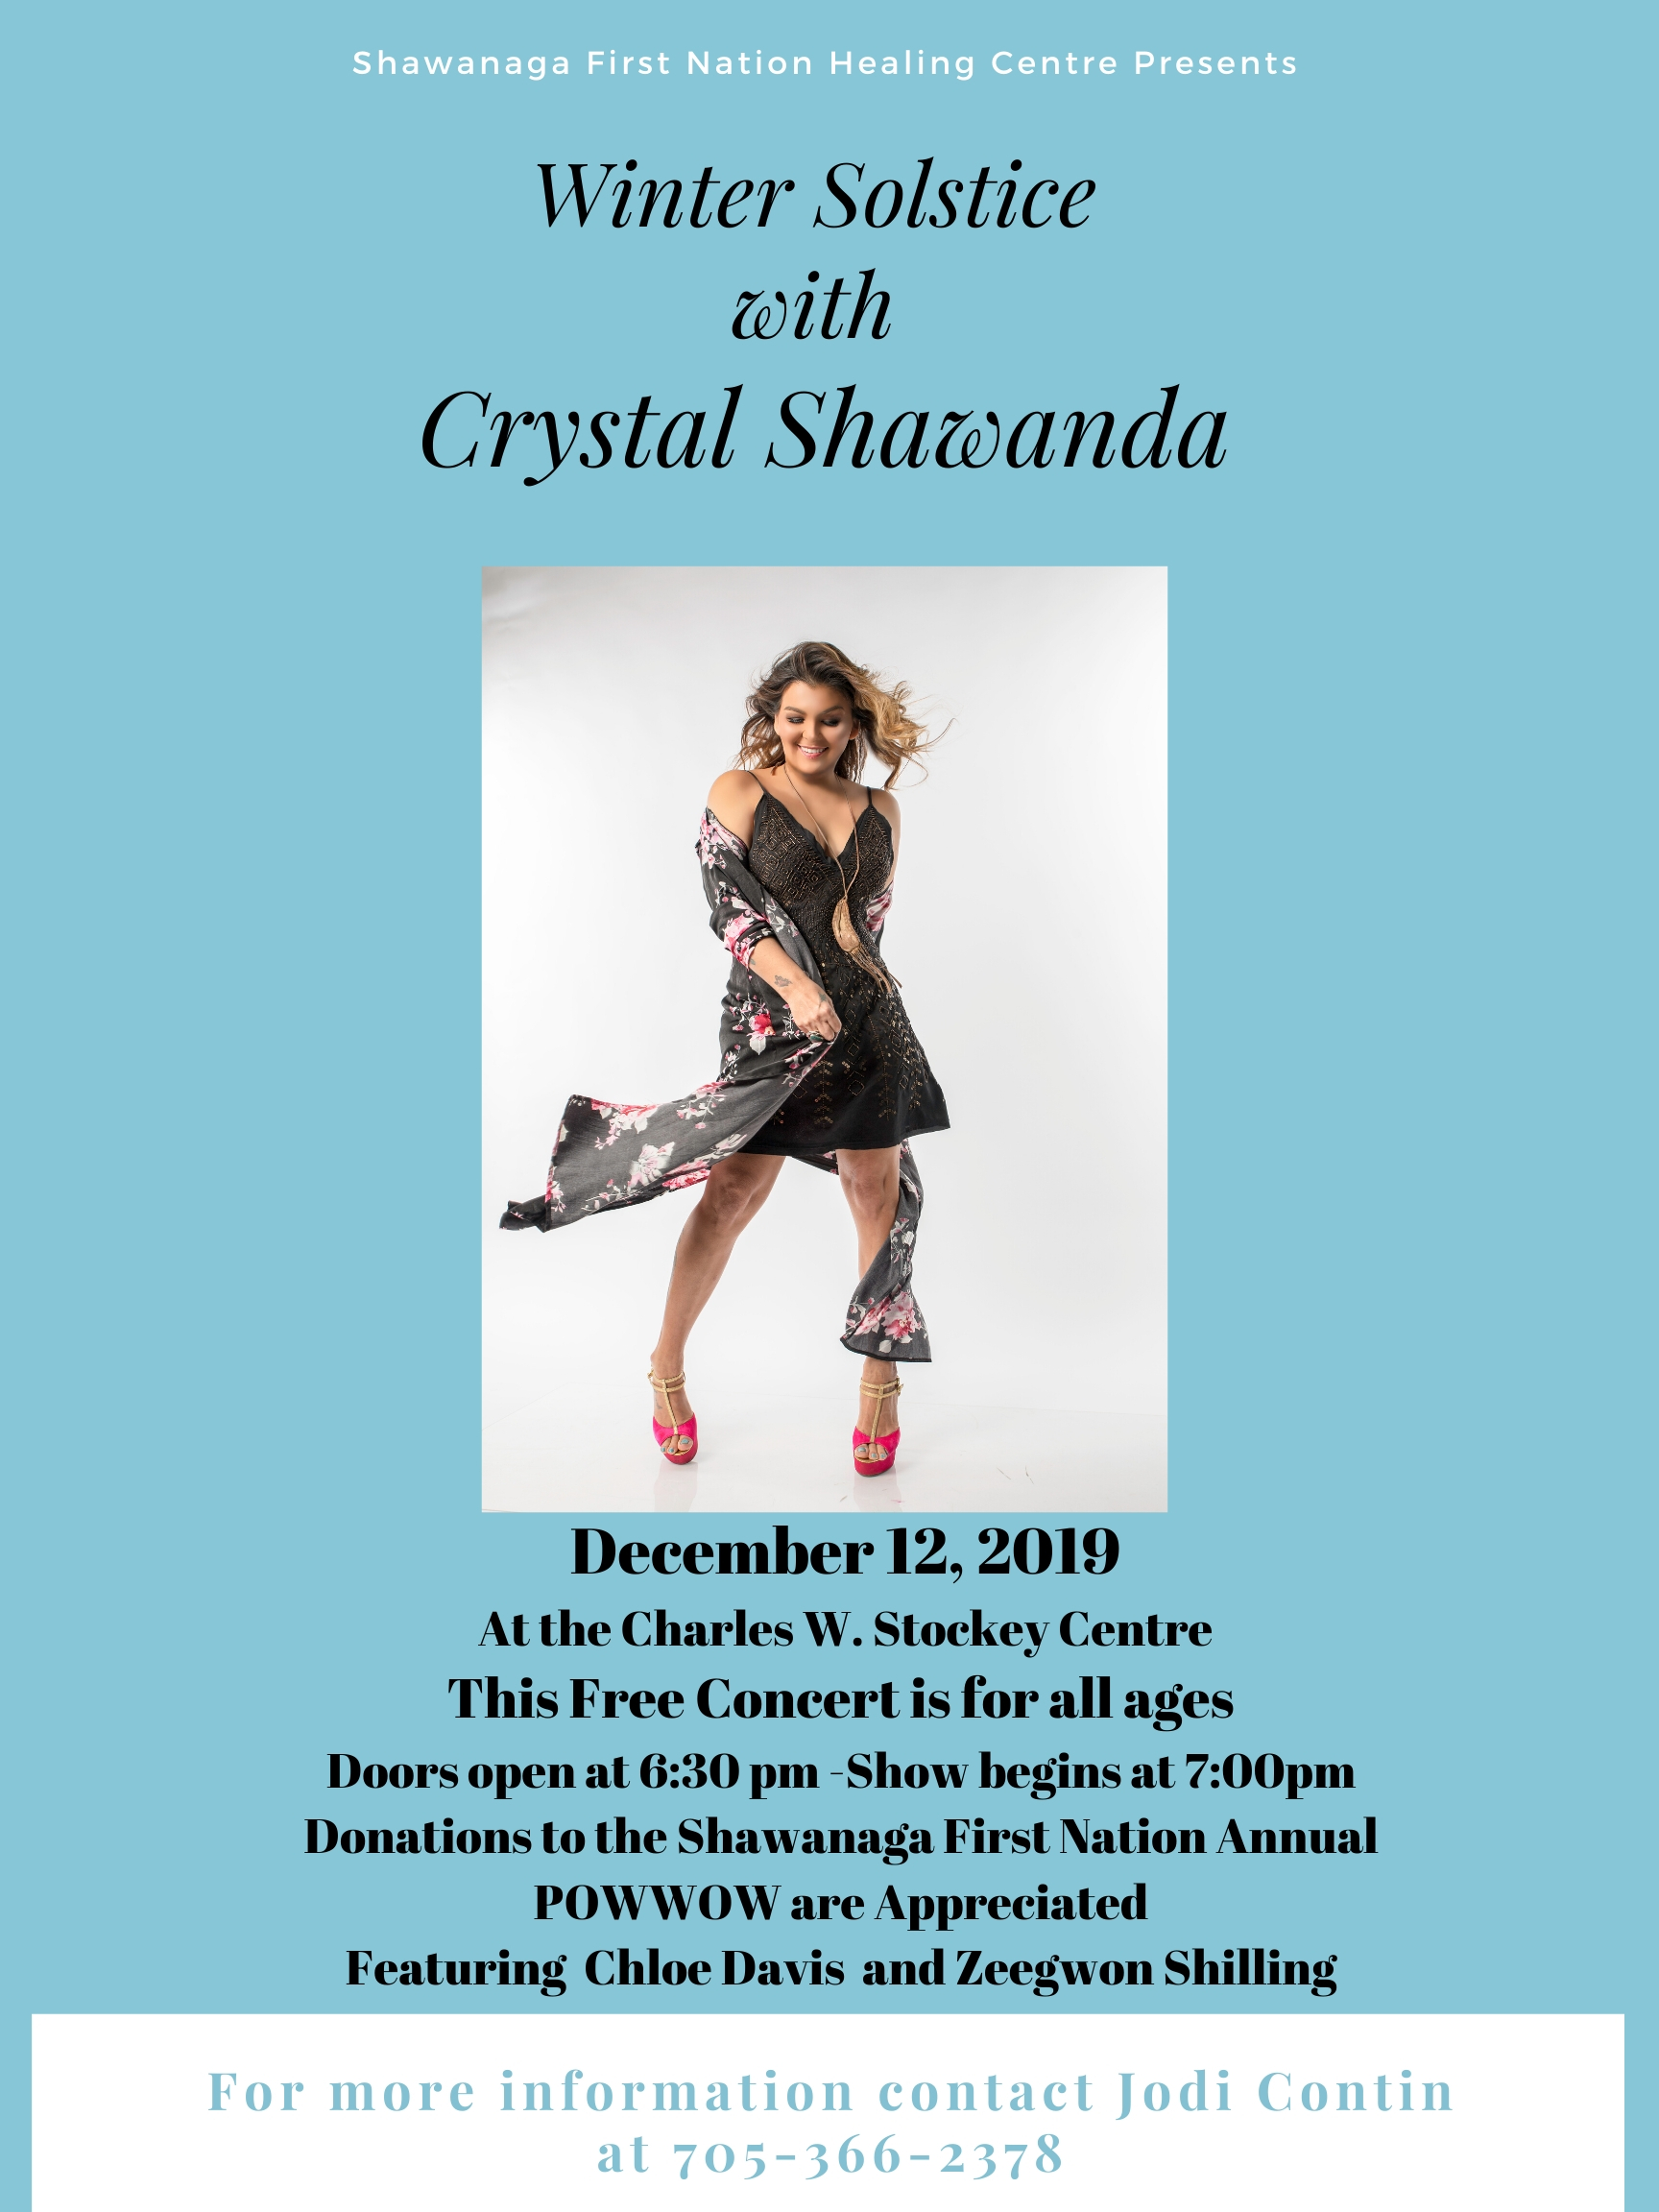 Crystal Shawanda Concert Image